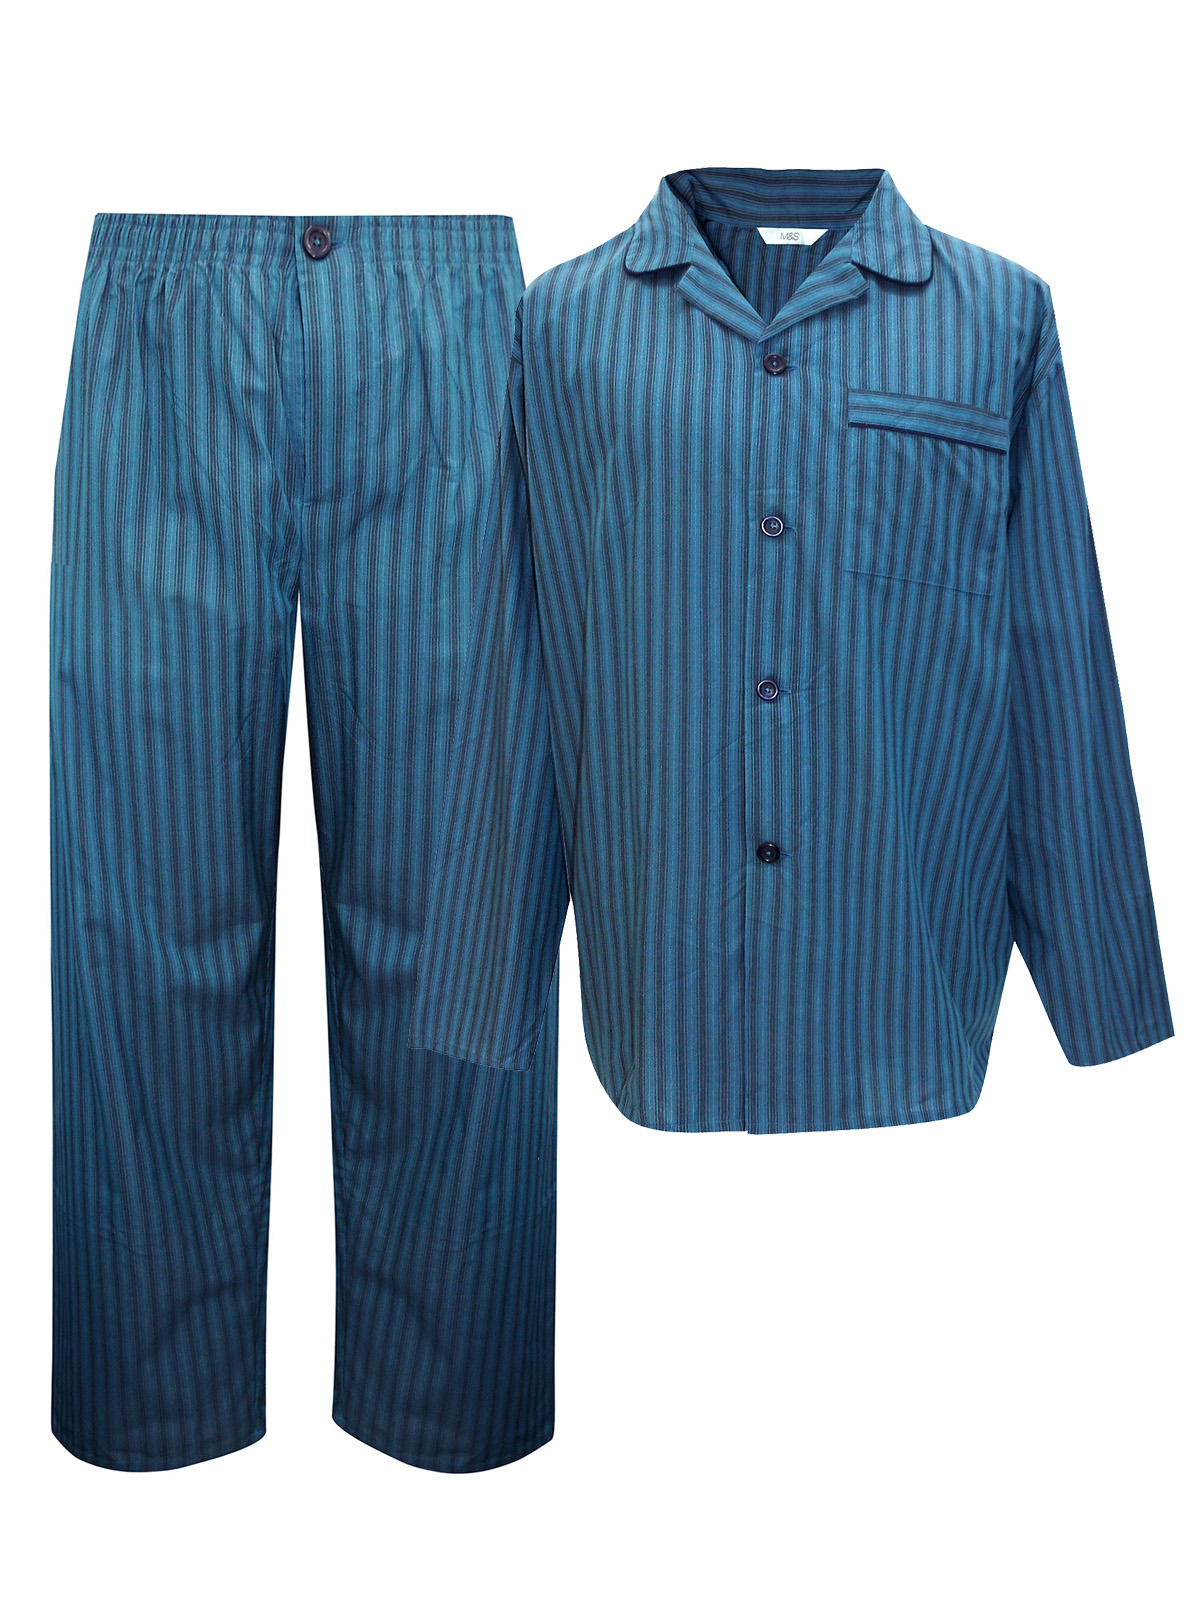 Marks and Spencer - - M&5 TEAL Mens Striped Long Sleeve Pyjama Set ...